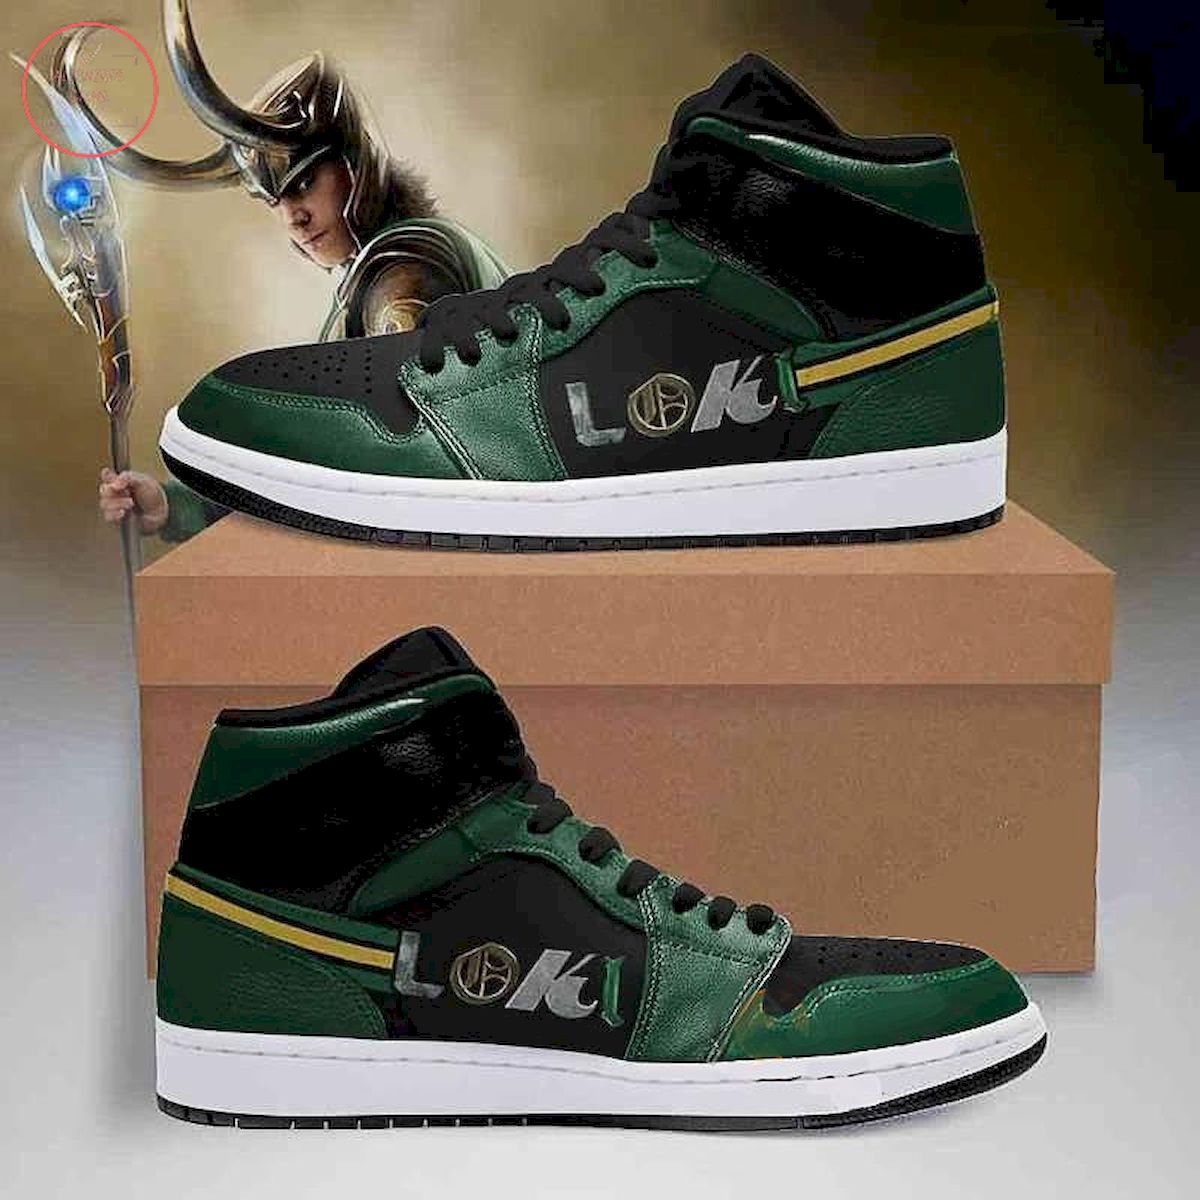 Loki Marvel High Air Jordan 1 Sneakers